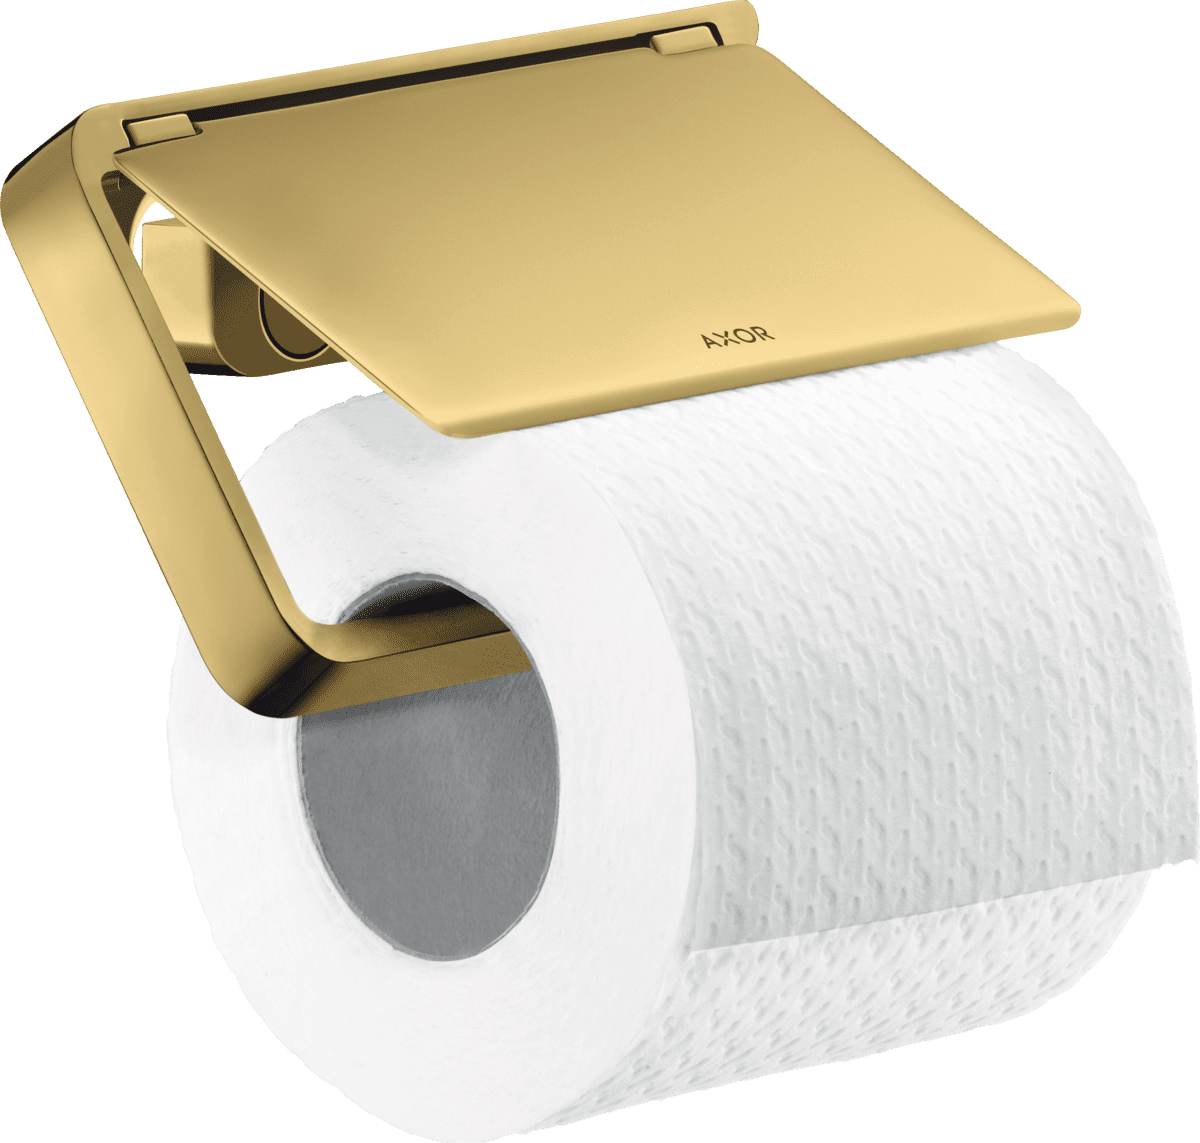 HANSGROHE AXOR Universal Softsquare Tuvalet kağıtlığı kapaklı #42836990 - Parlak Altın Optik resmi